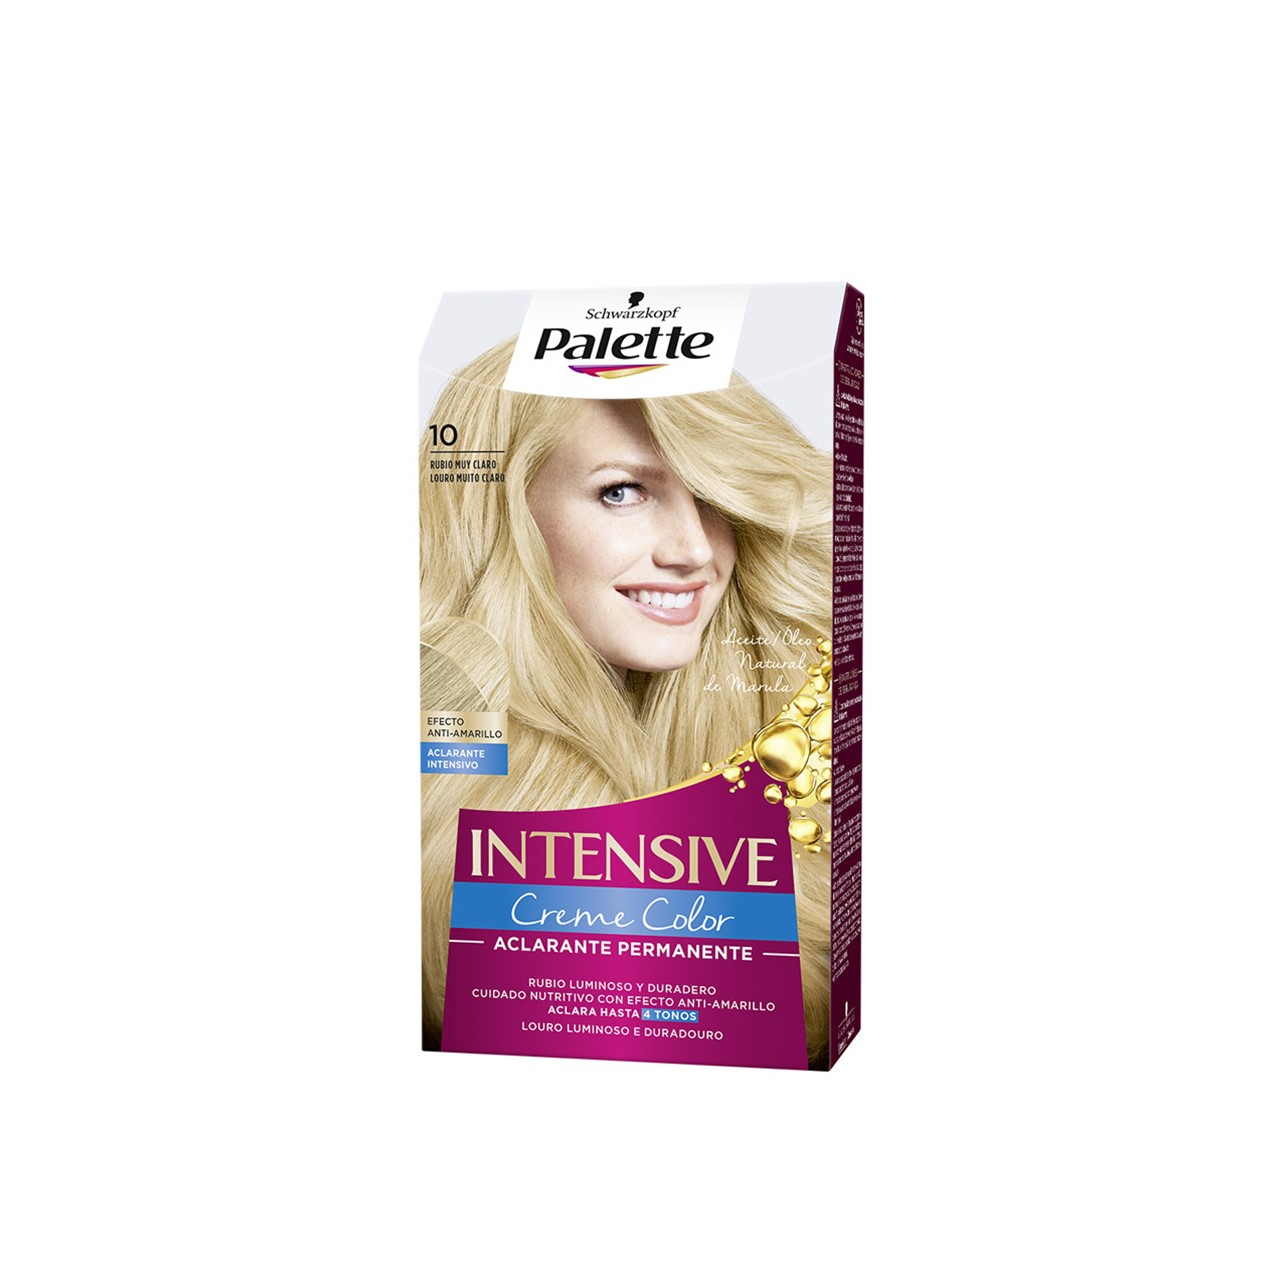 Schwarzkopf Palette Intensive Creme Color Permanent Hair Dye 10 Very Light Blonde